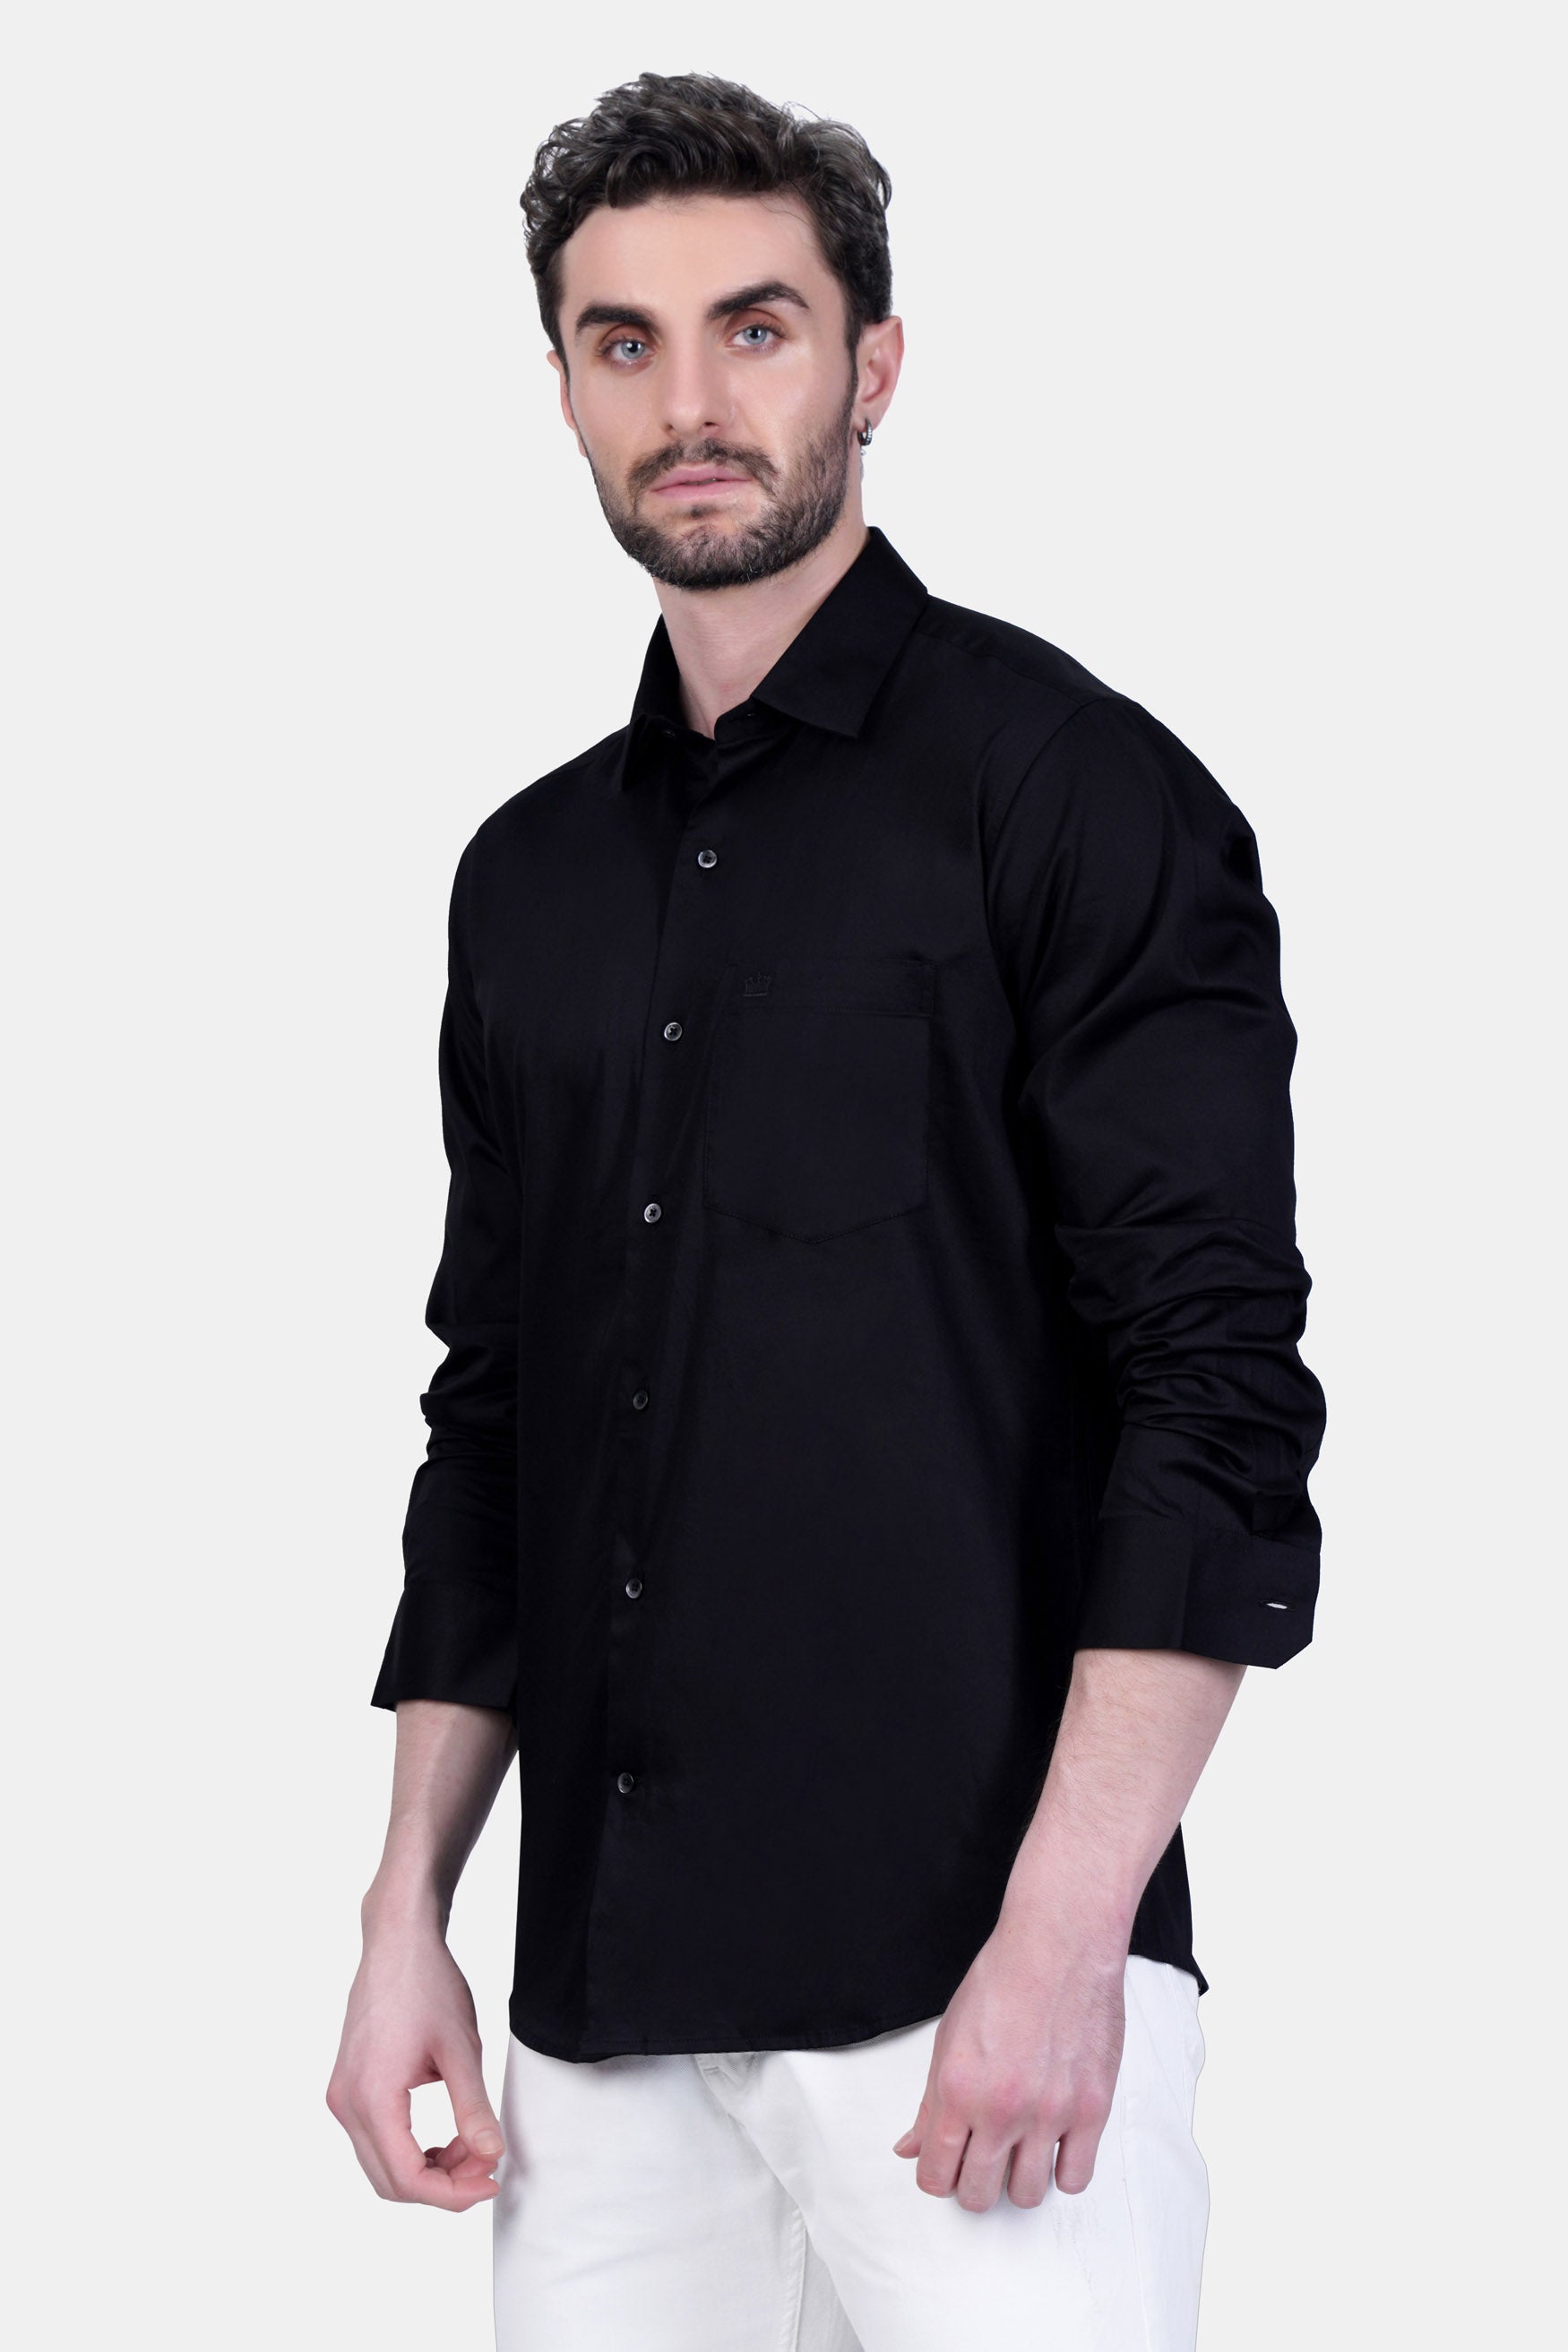 Jade Black French Crown Printed Subtle Sheen Super Soft Premium Cotton Designer Shirt